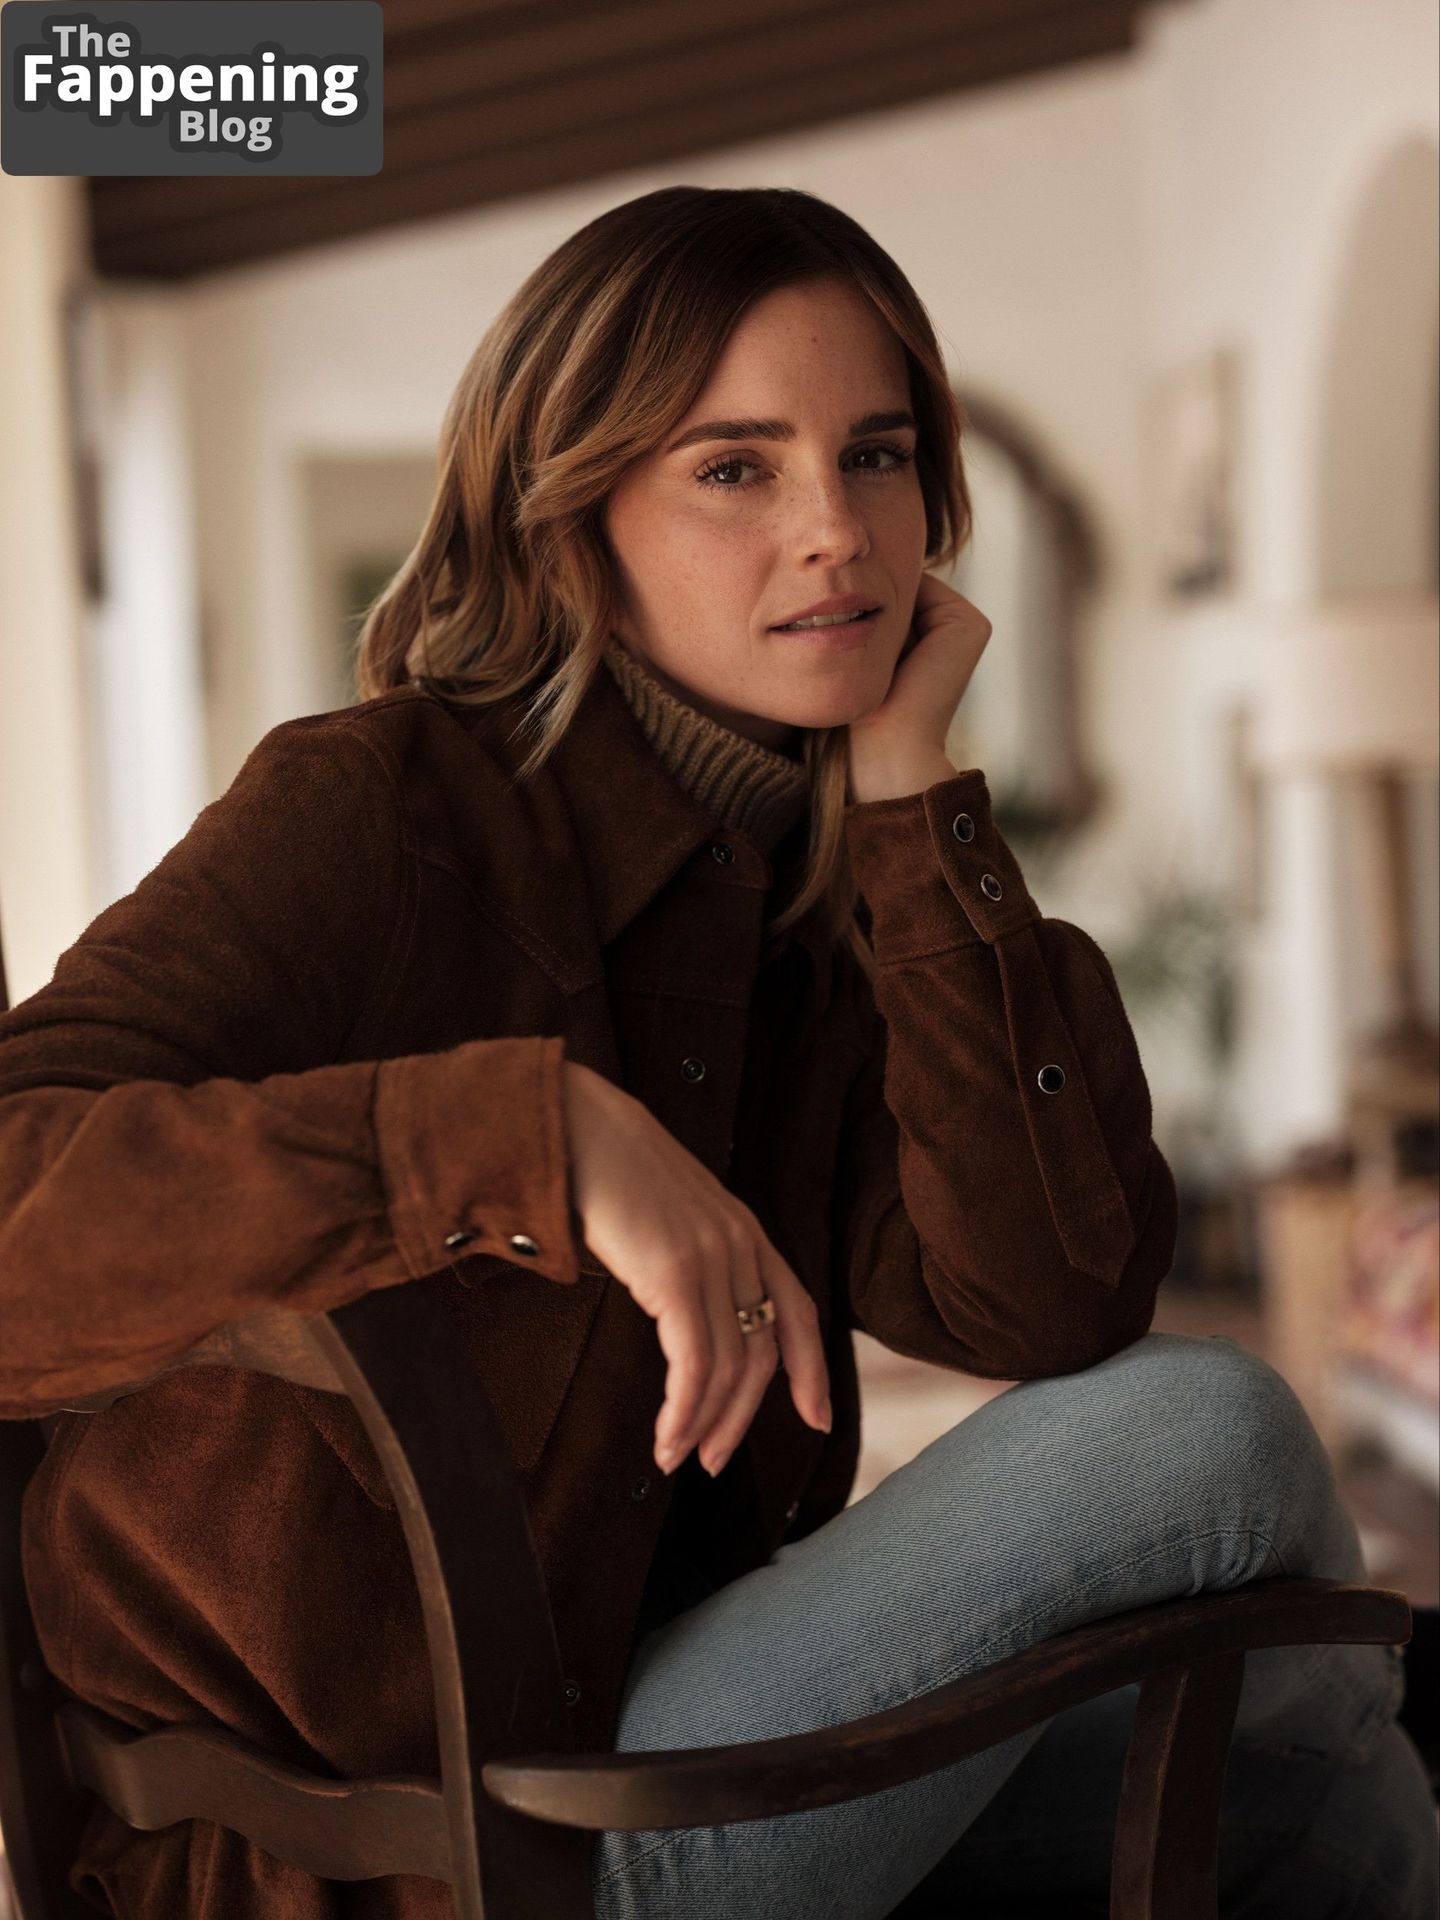 Emma Watson Sexy (6 Hot Photos)